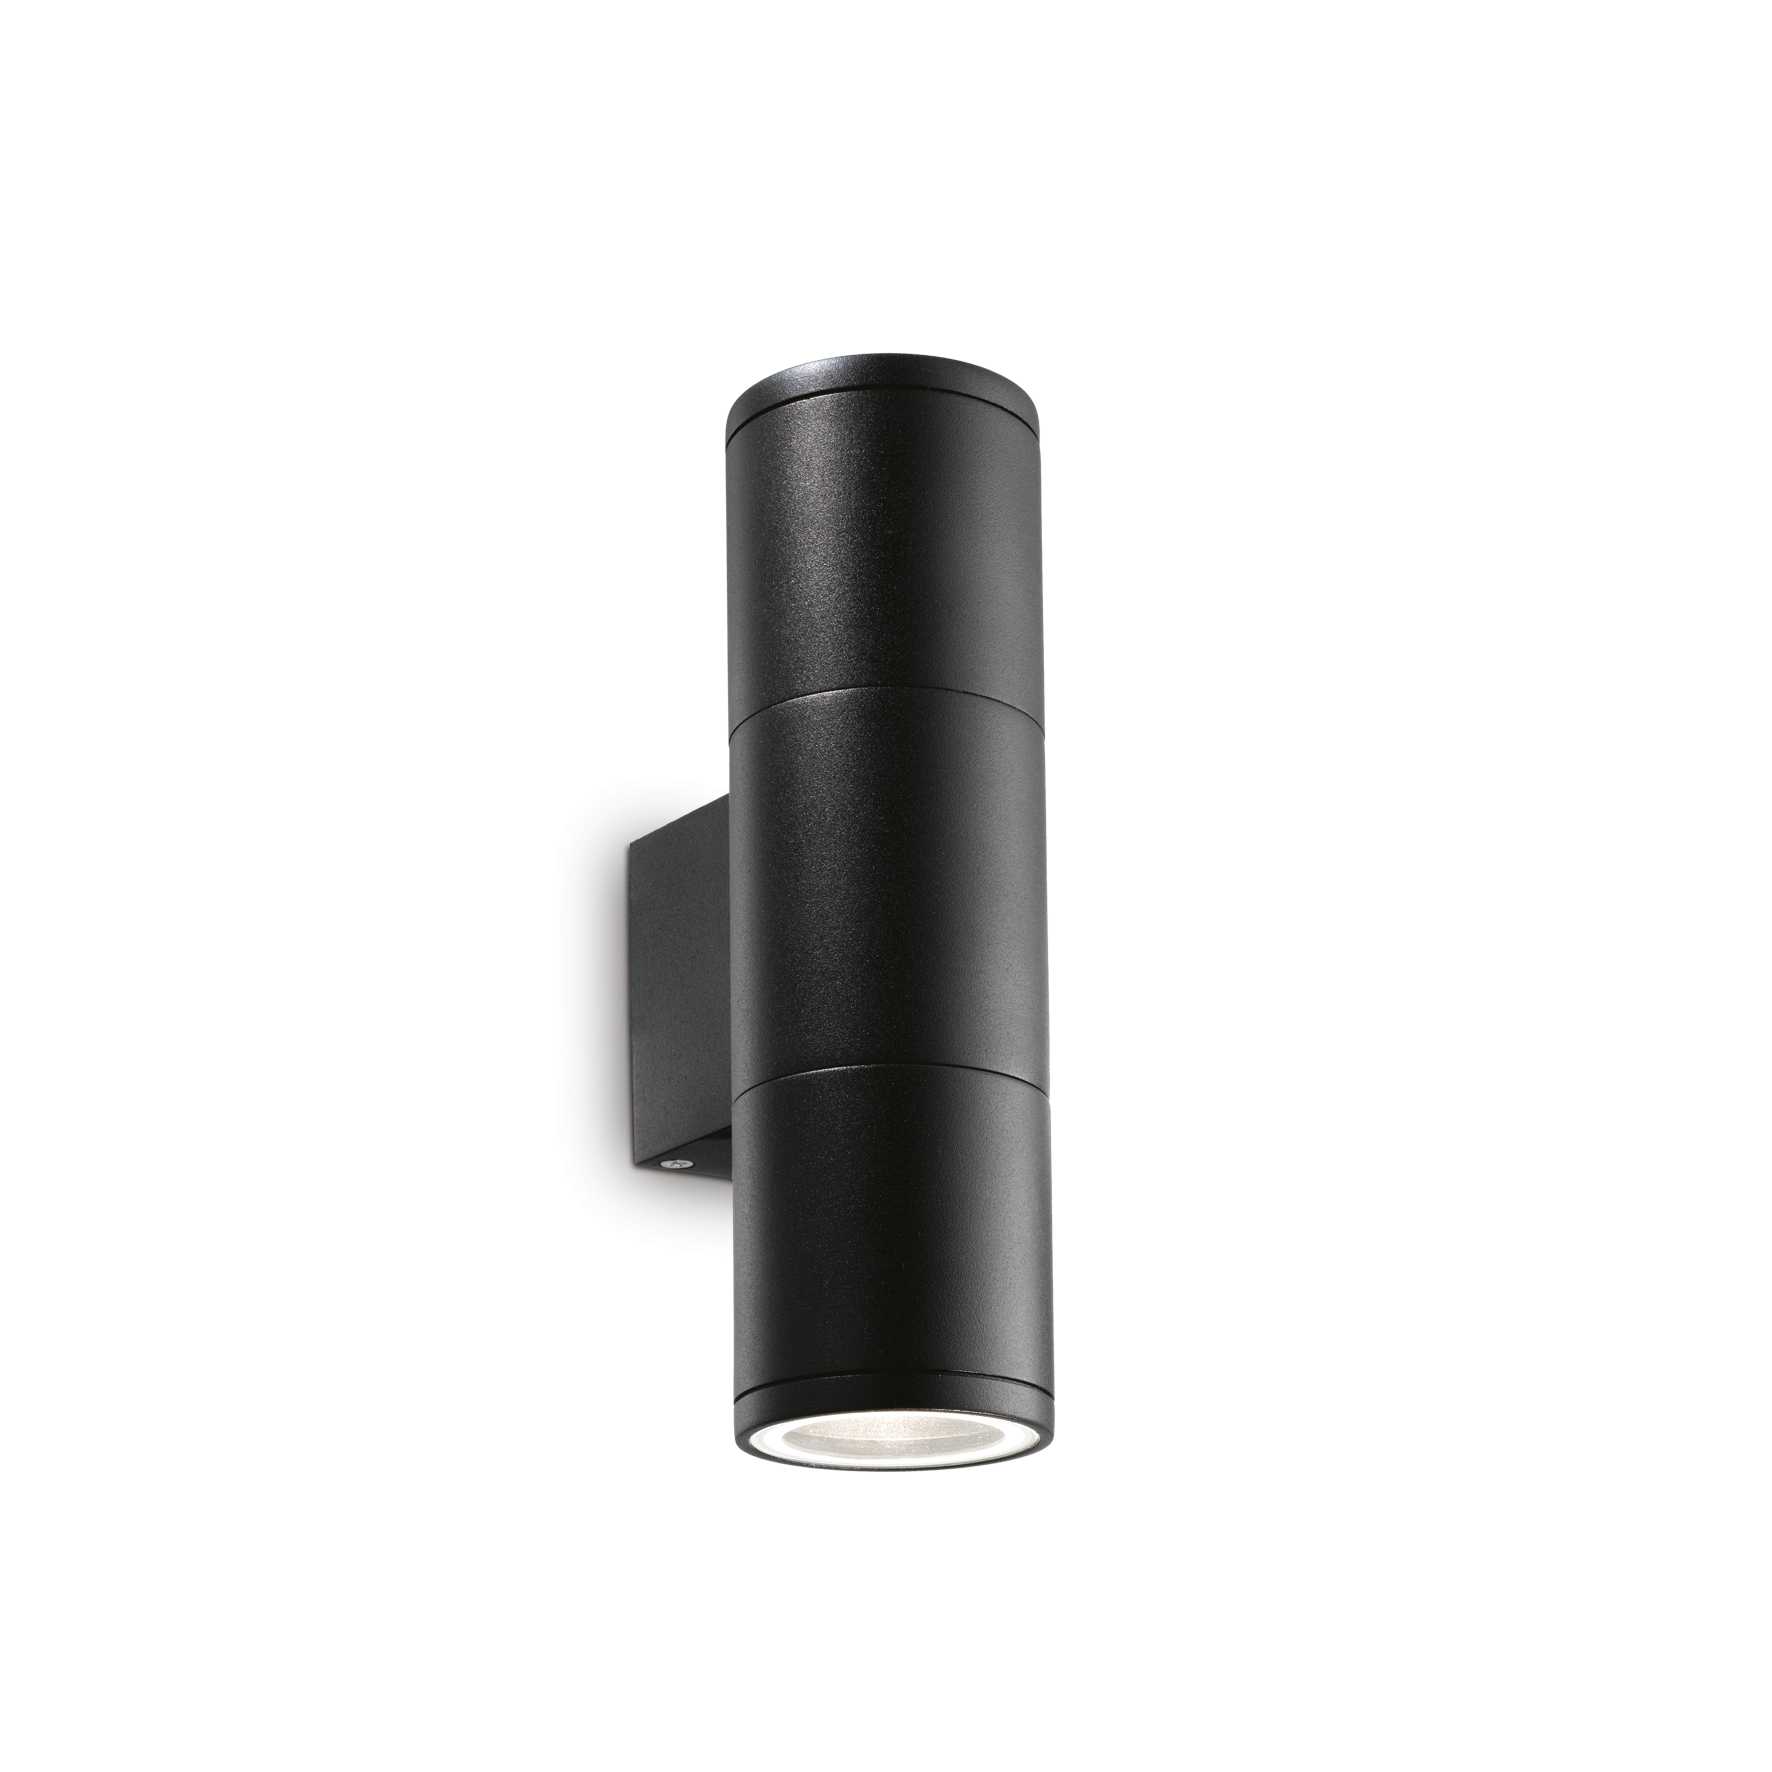 AD hotelska oprema Vanjska zidna lampa Gun ap2 mala- Crne boje slika proizvoda